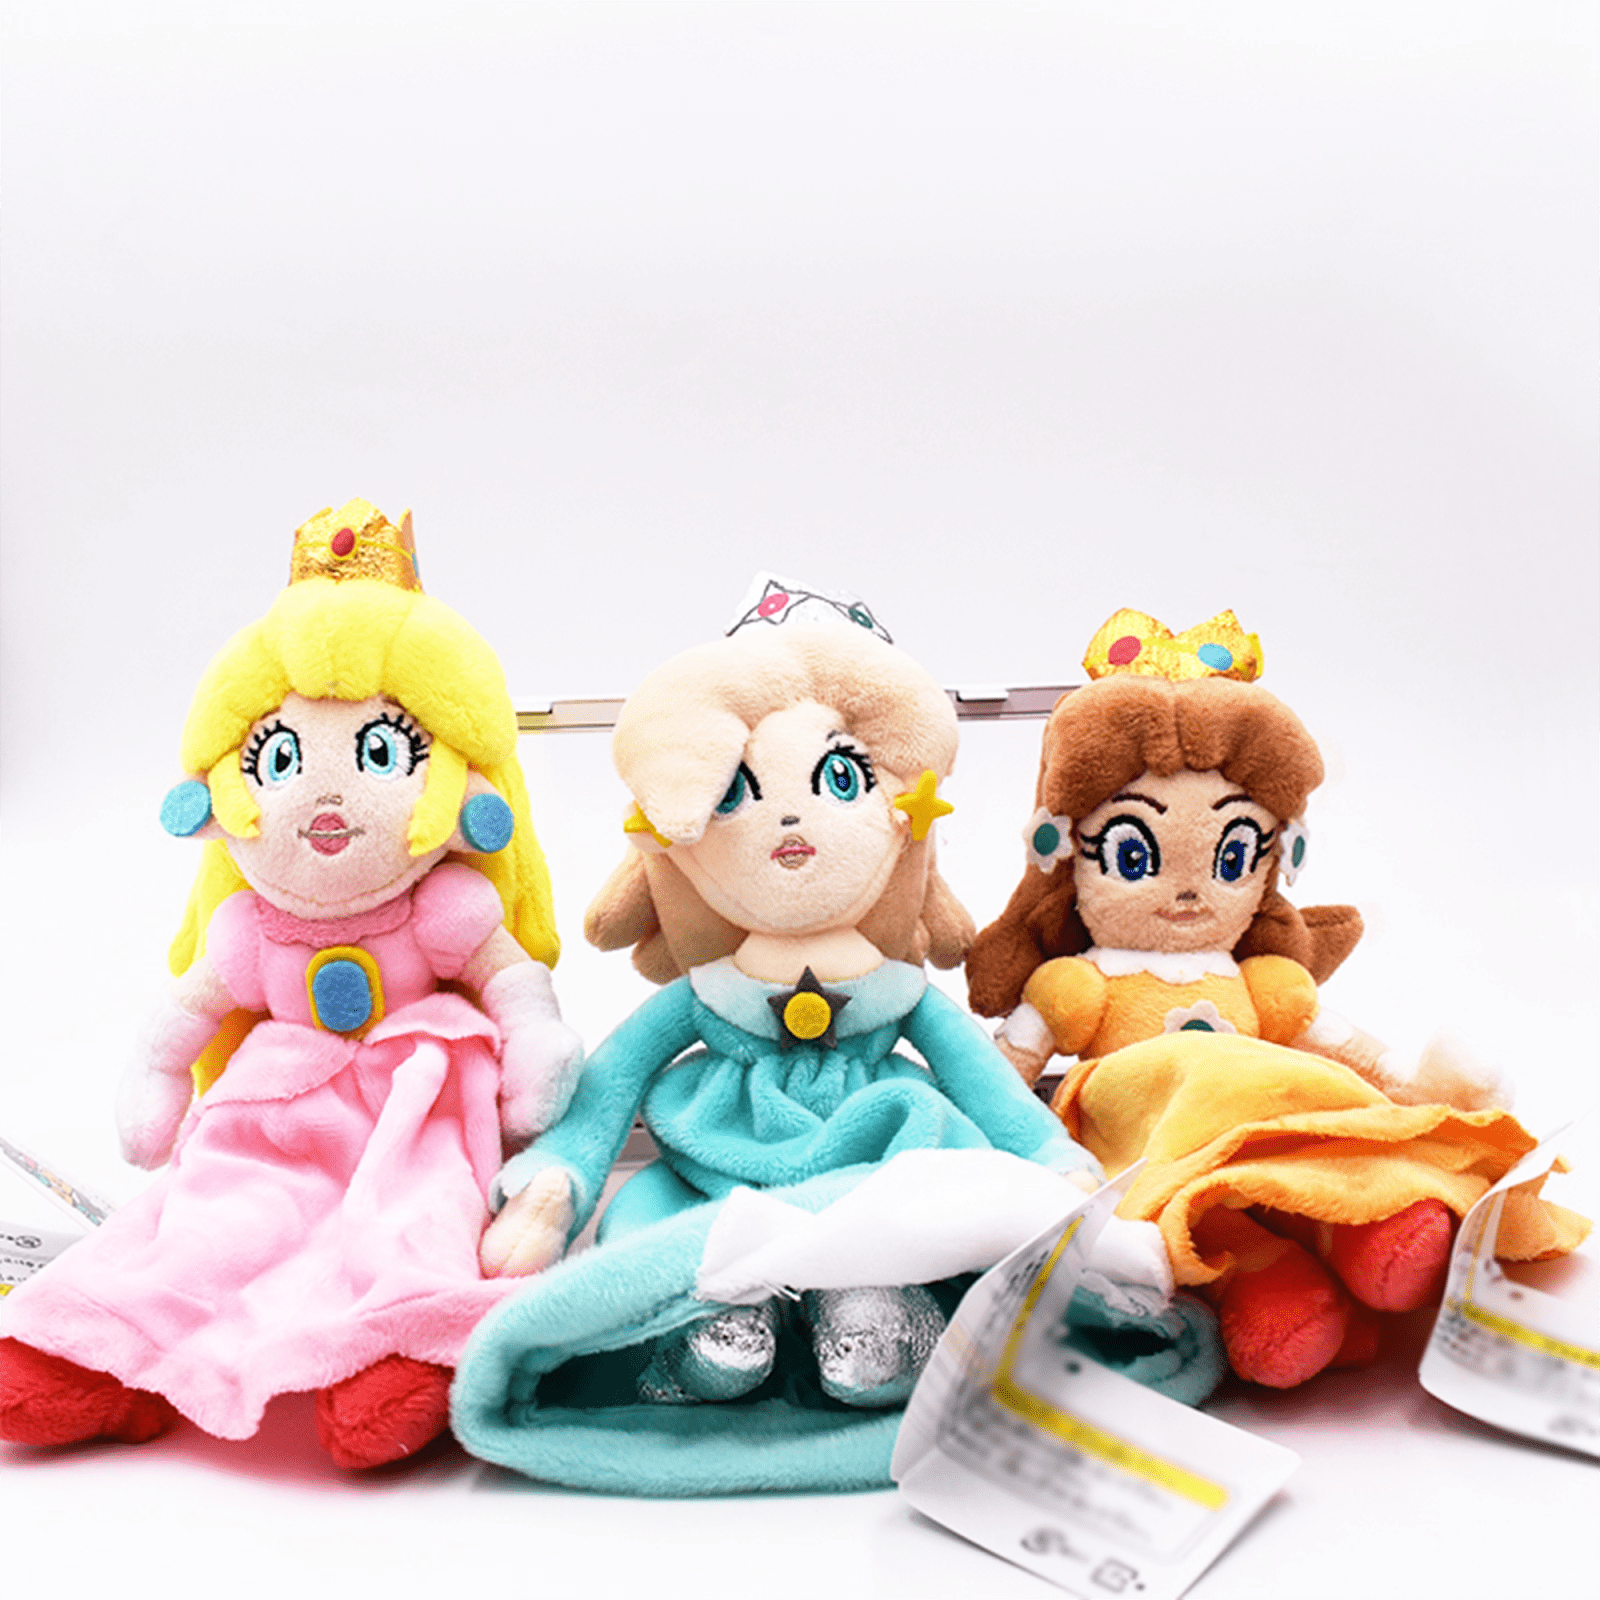 Super Mario Bros Mario Princess Peach Plush Doll Figure Soft Toy 7 inch